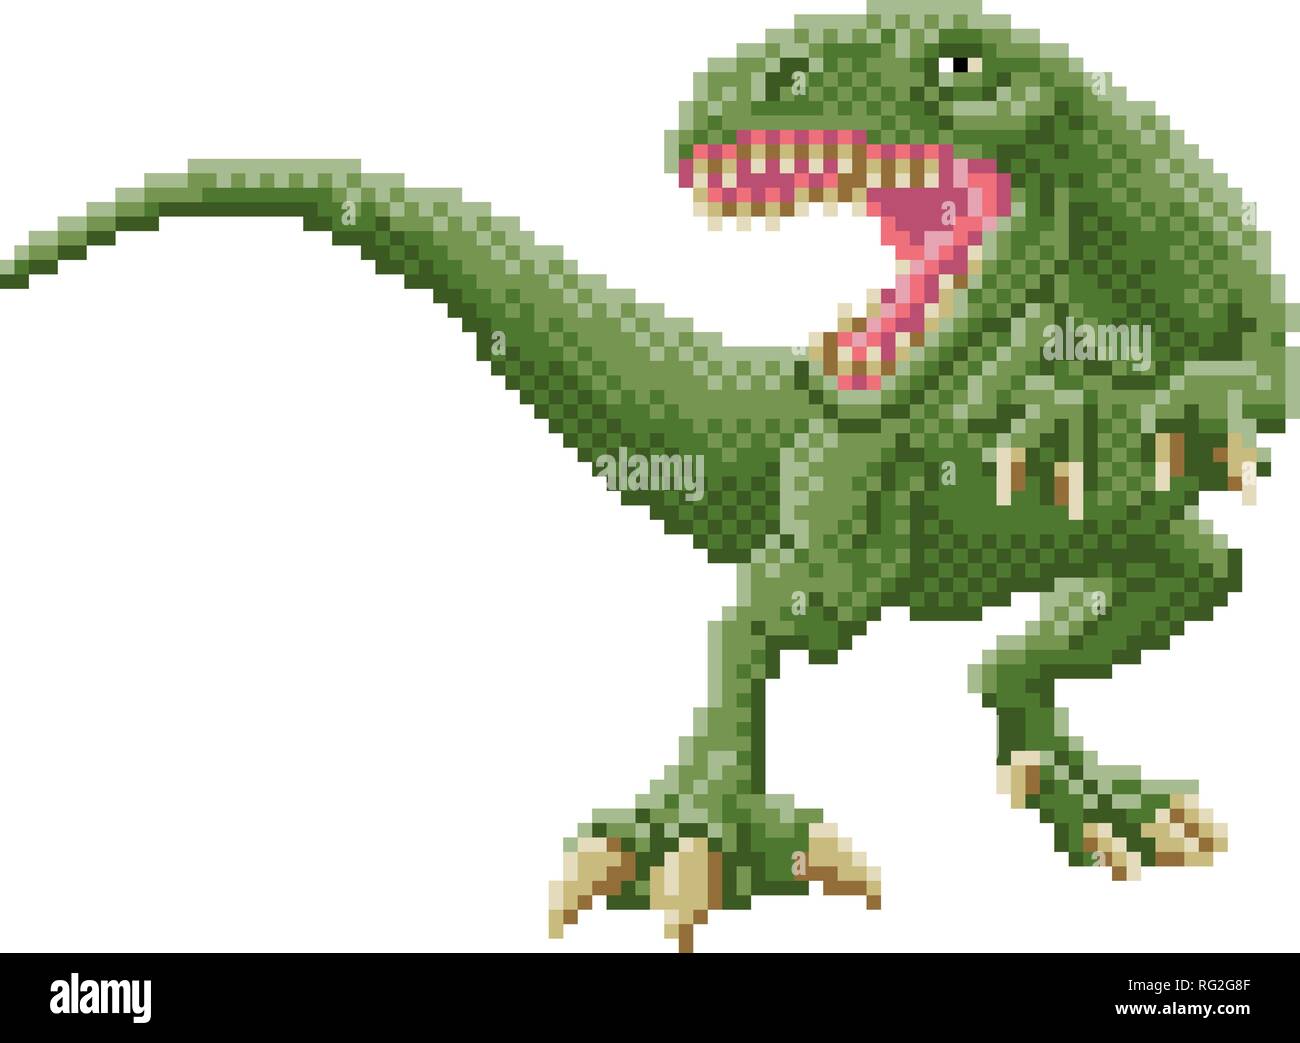 Trex dinosaure 8 Bit Pixel Art jeu Arcade Cartoon Illustration de Vecteur